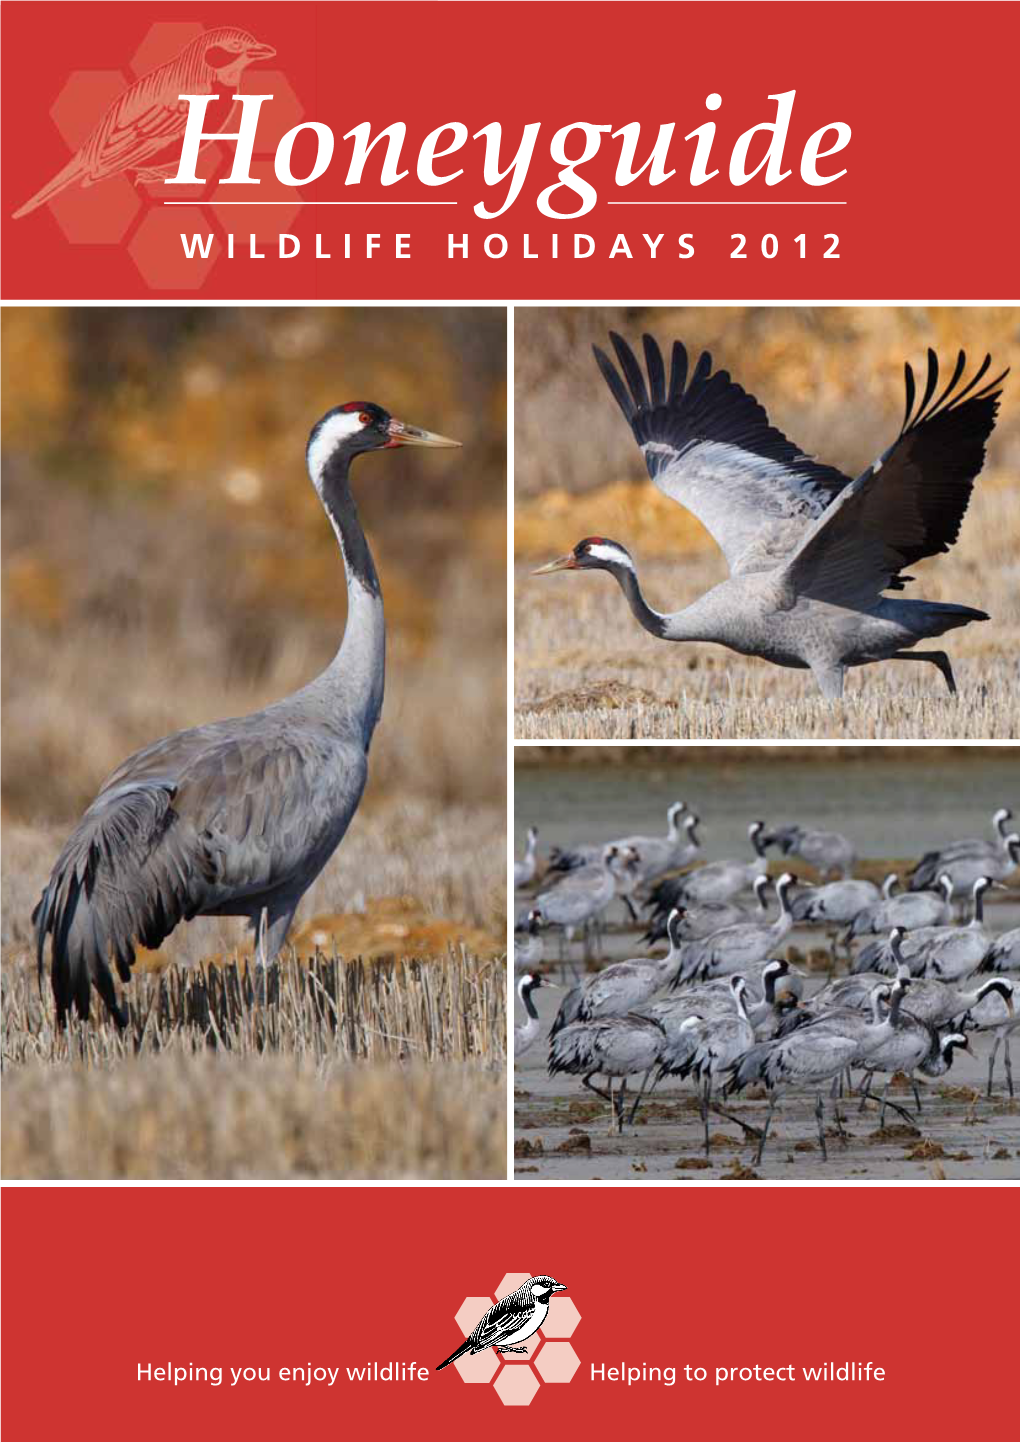 Wildlife Holidays 2012 Honeyguide Brochure 2012.Qxd:5361 26/08/2011 15:46 Page 5